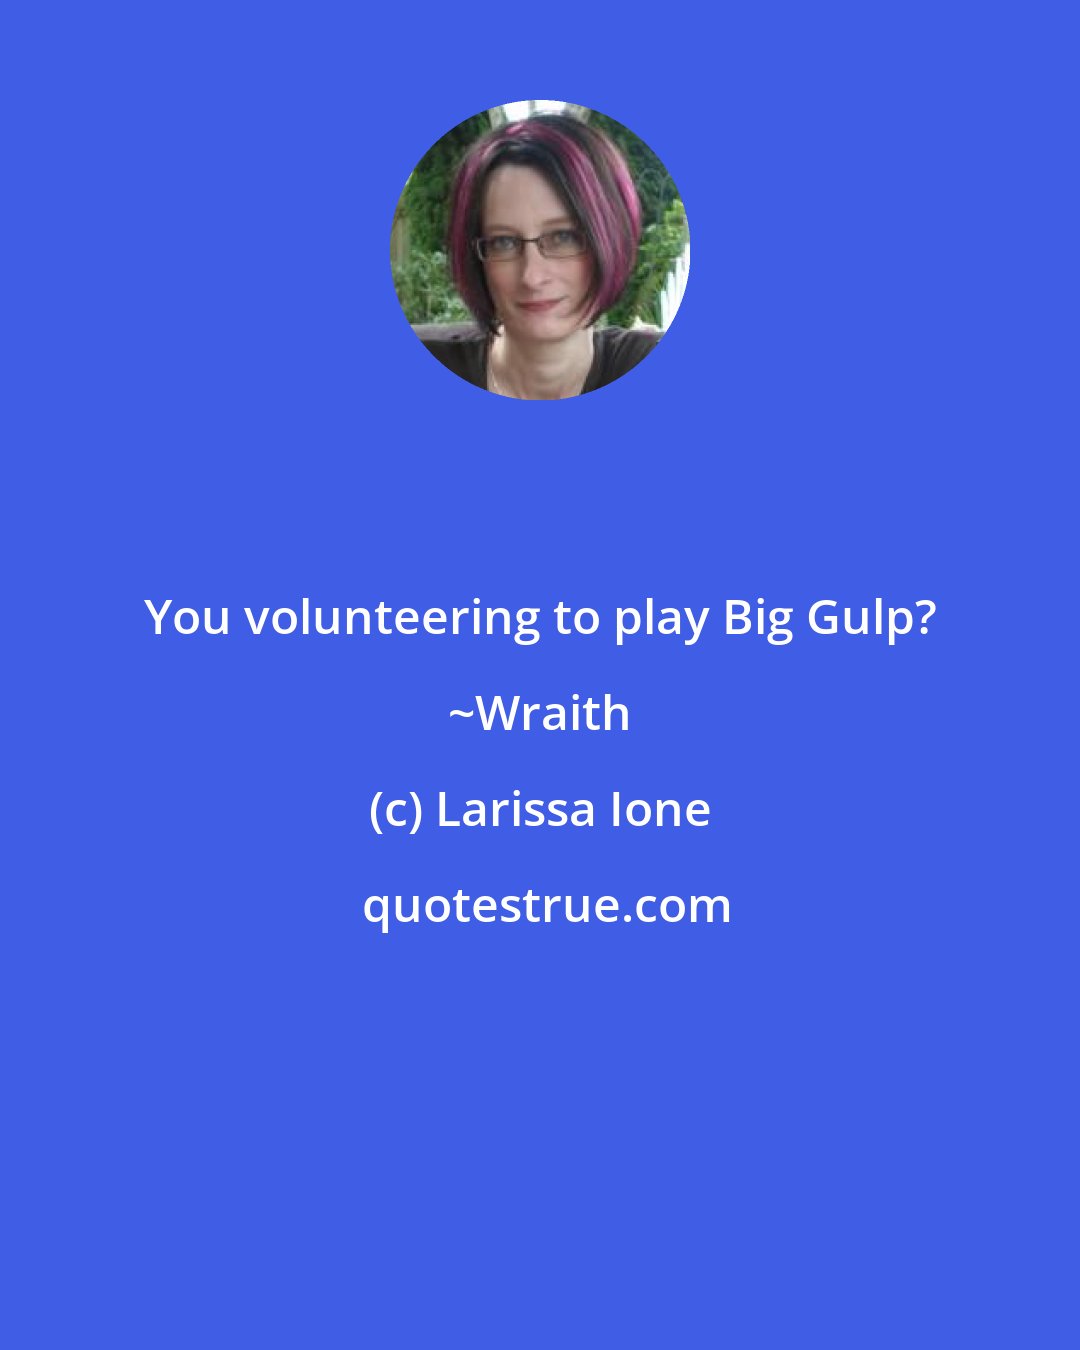 Larissa Ione: You volunteering to play Big Gulp? ~Wraith